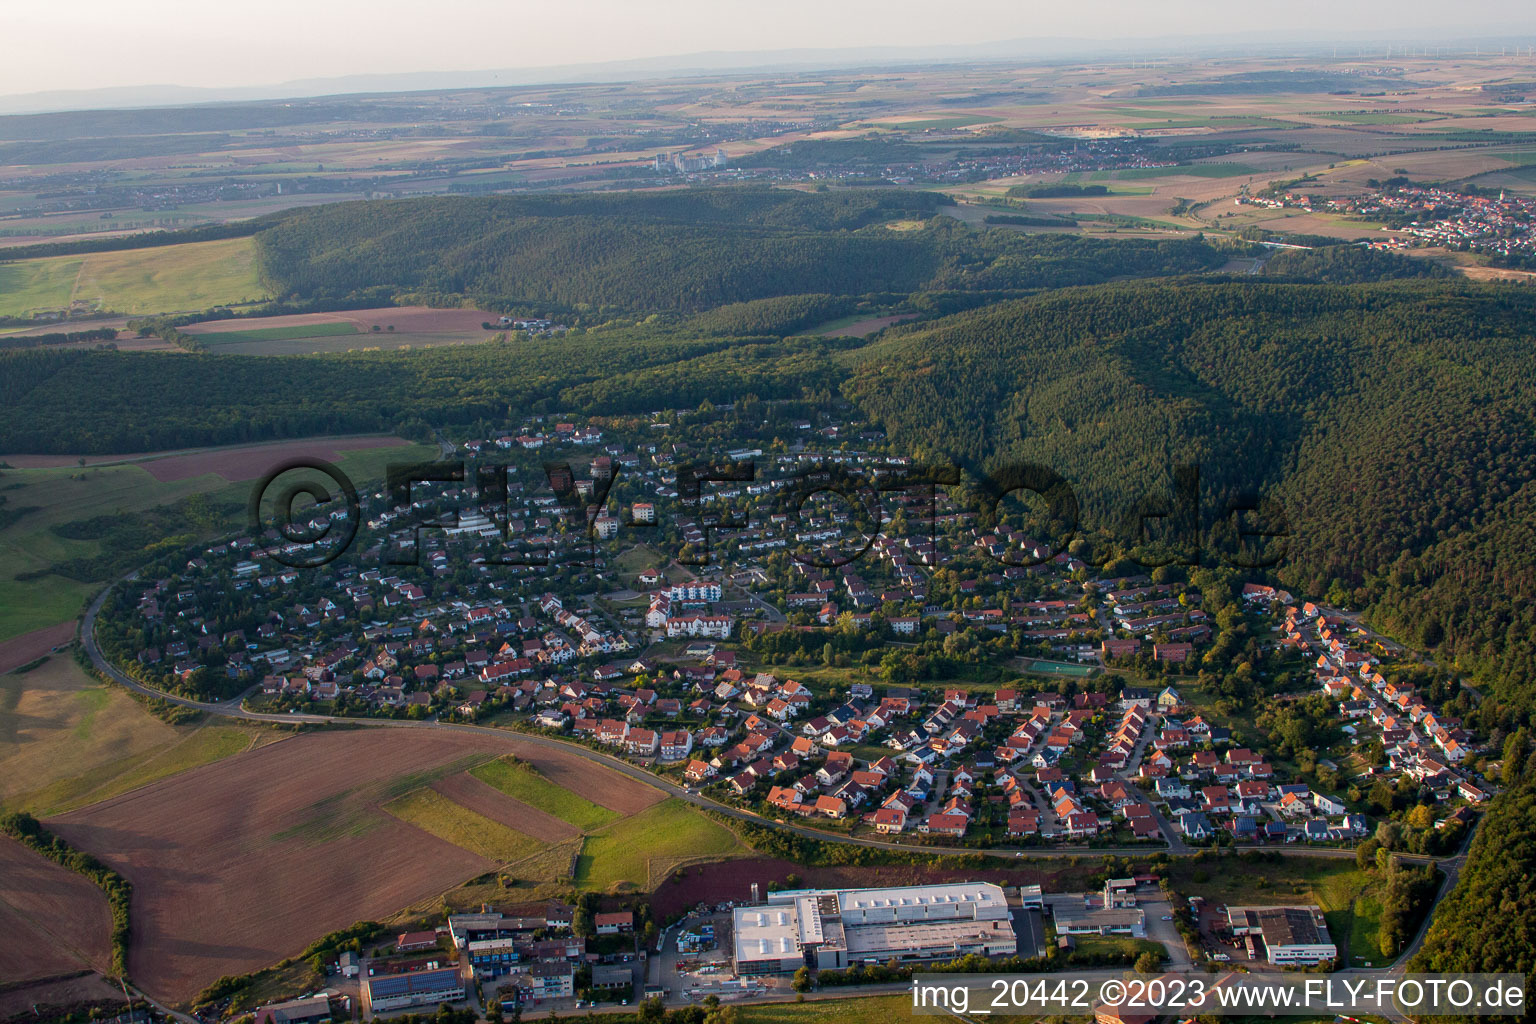 Steinborn in the state Rhineland-Palatinate, Germany